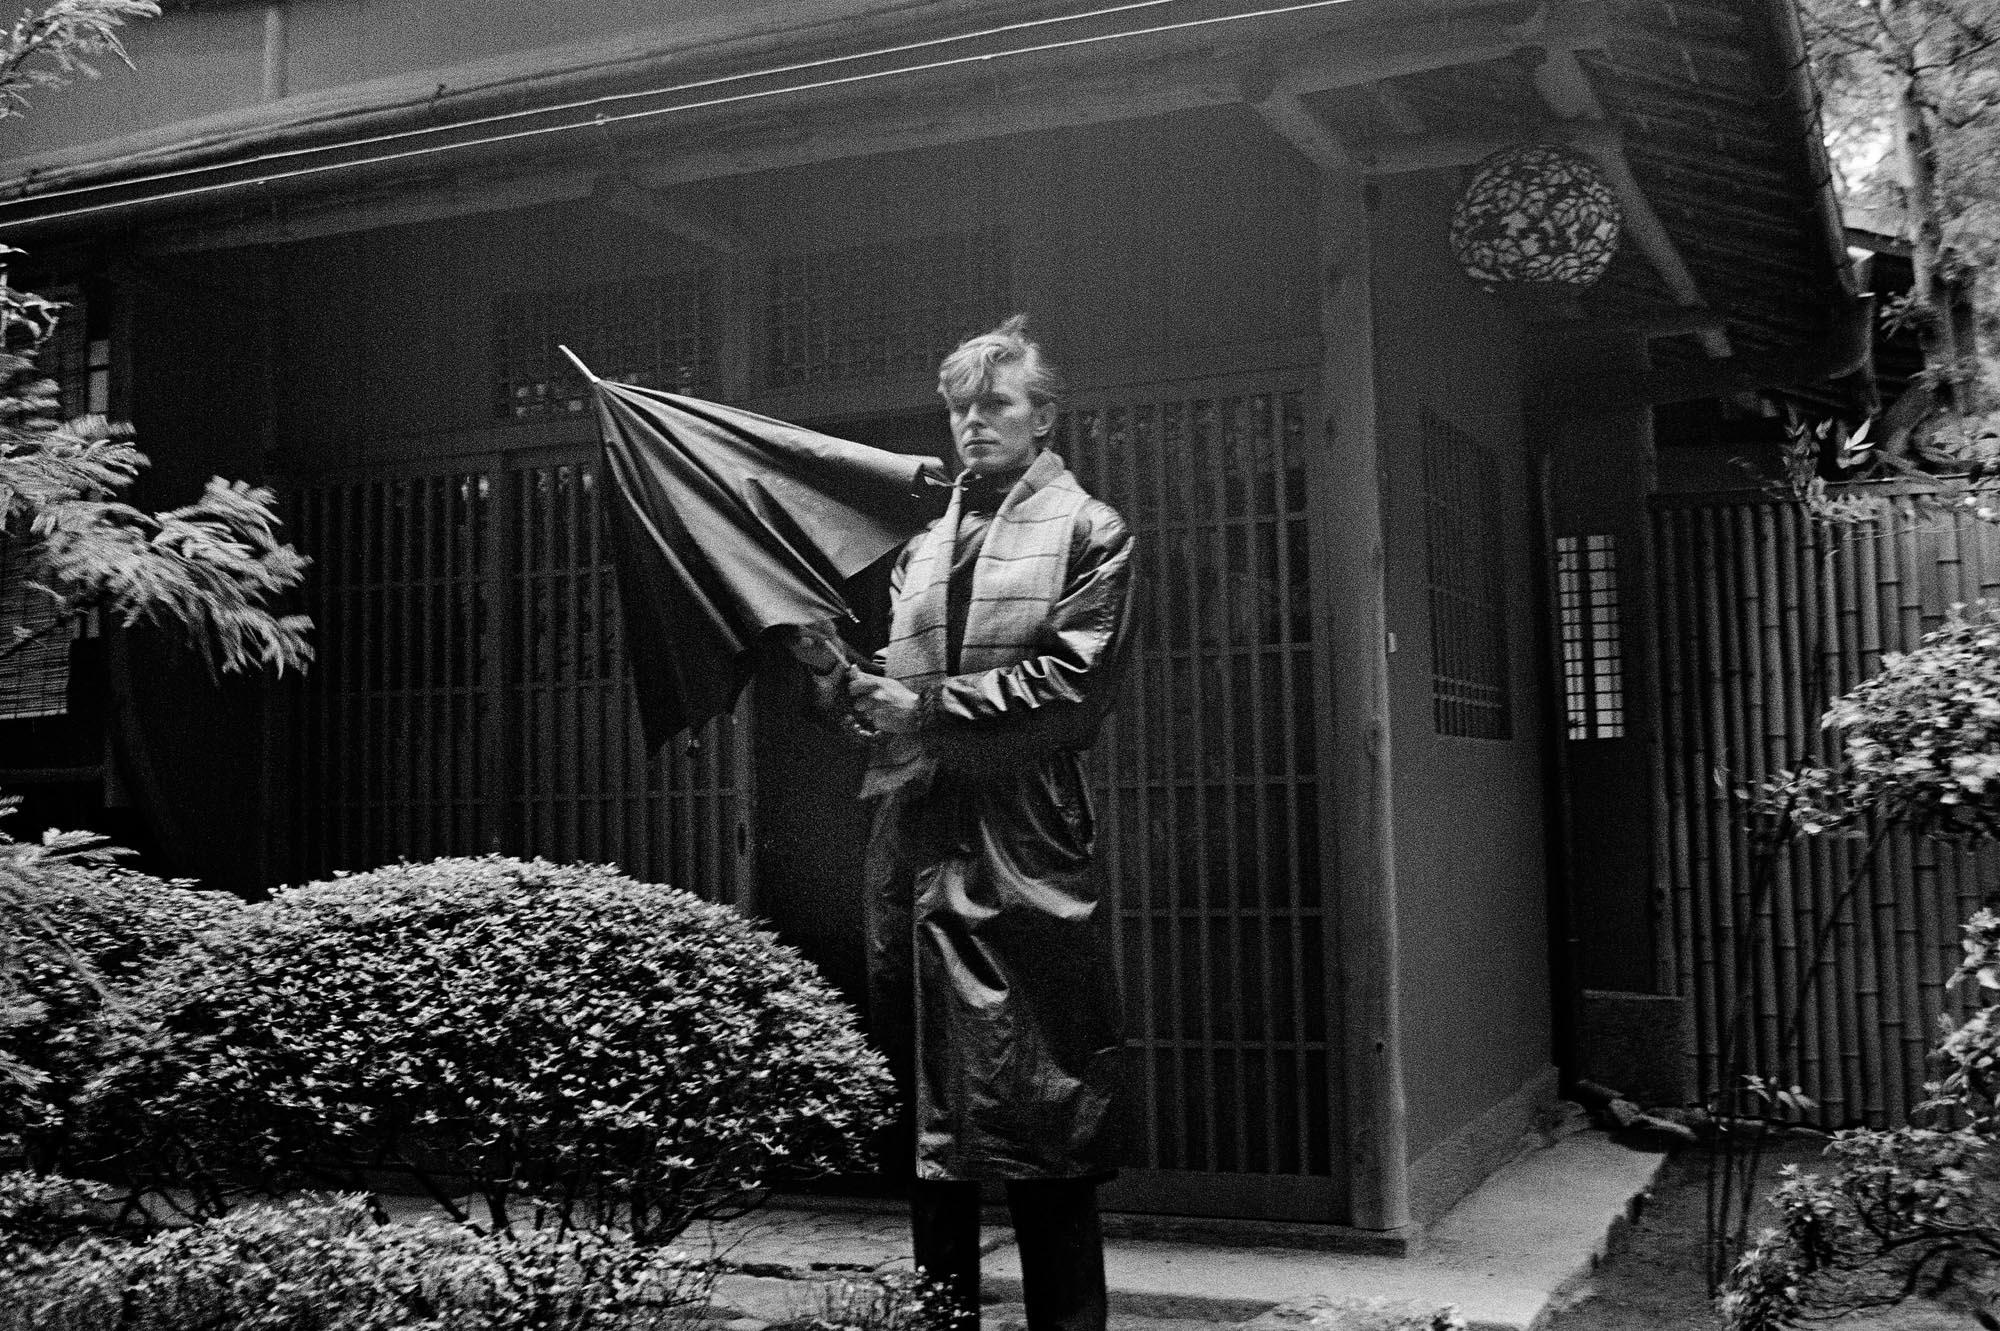 Masayoshi Sukita Portrait Photograph - David Bowie "The Same Old Kyoto" by Sukita